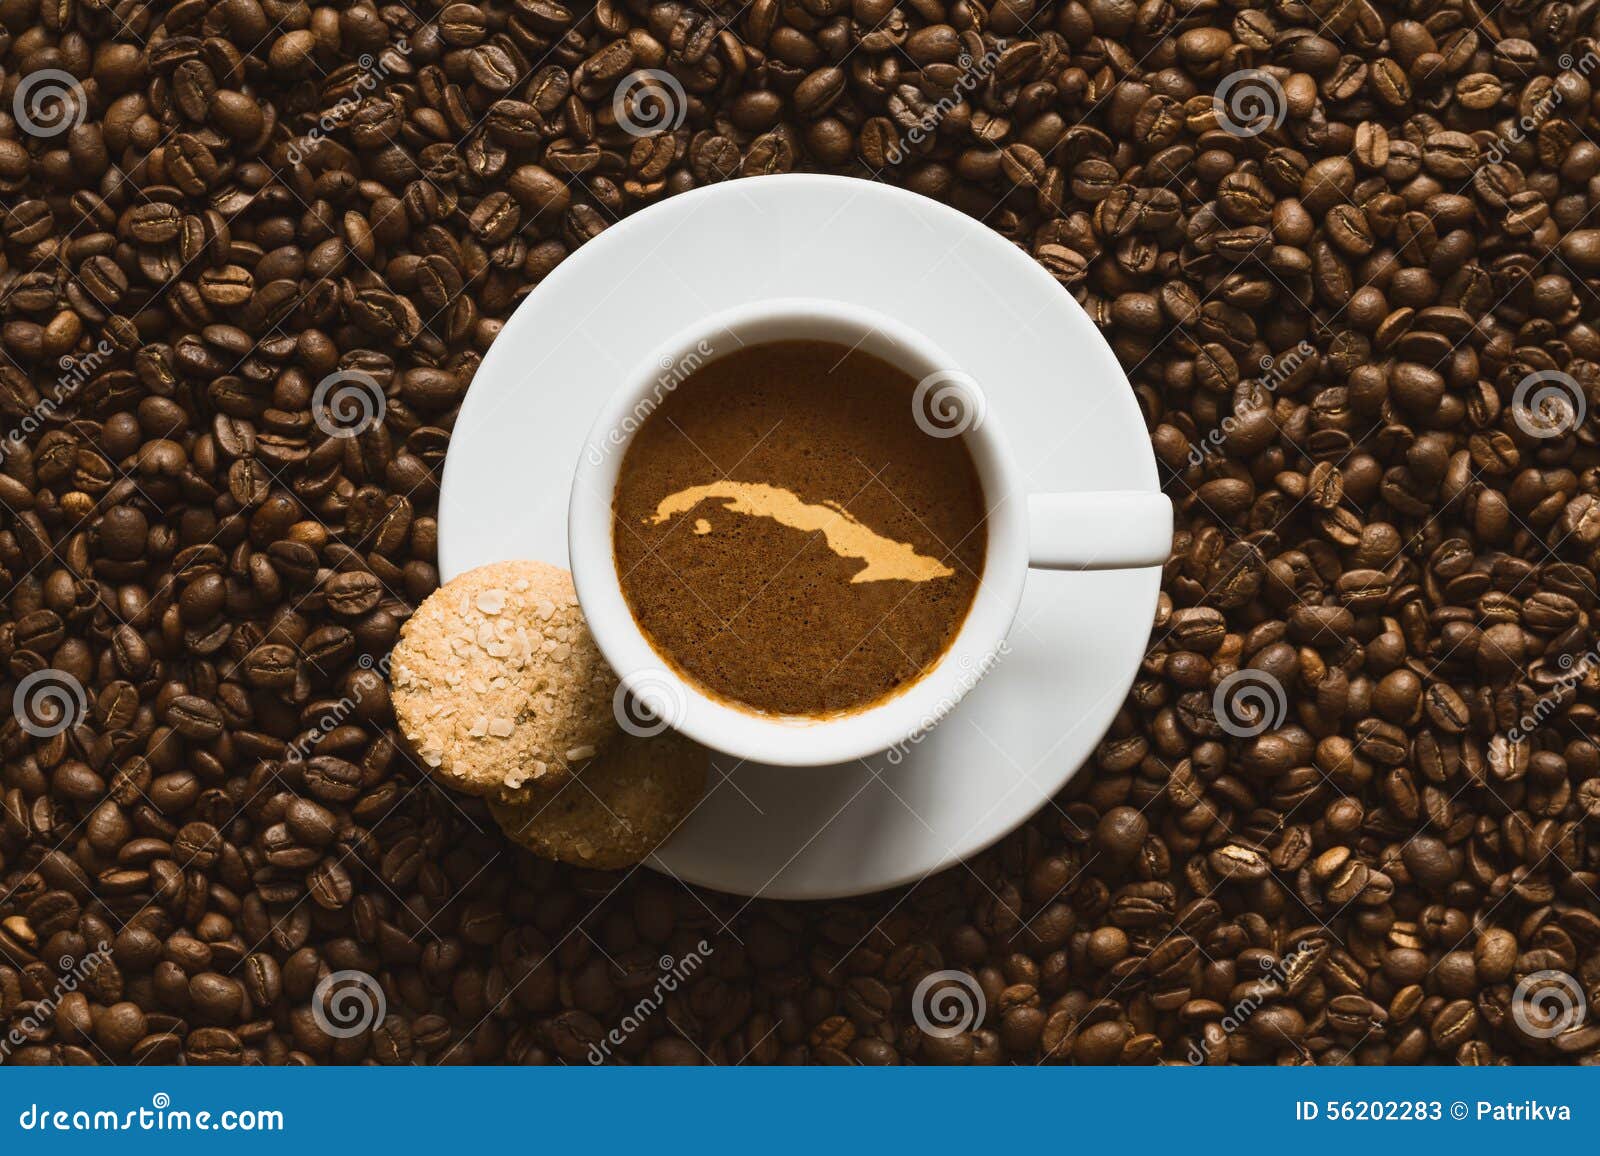 https://thumbs.dreamstime.com/z/still-life-coffee-map-cuba-photography-hot-beverage-56202283.jpg